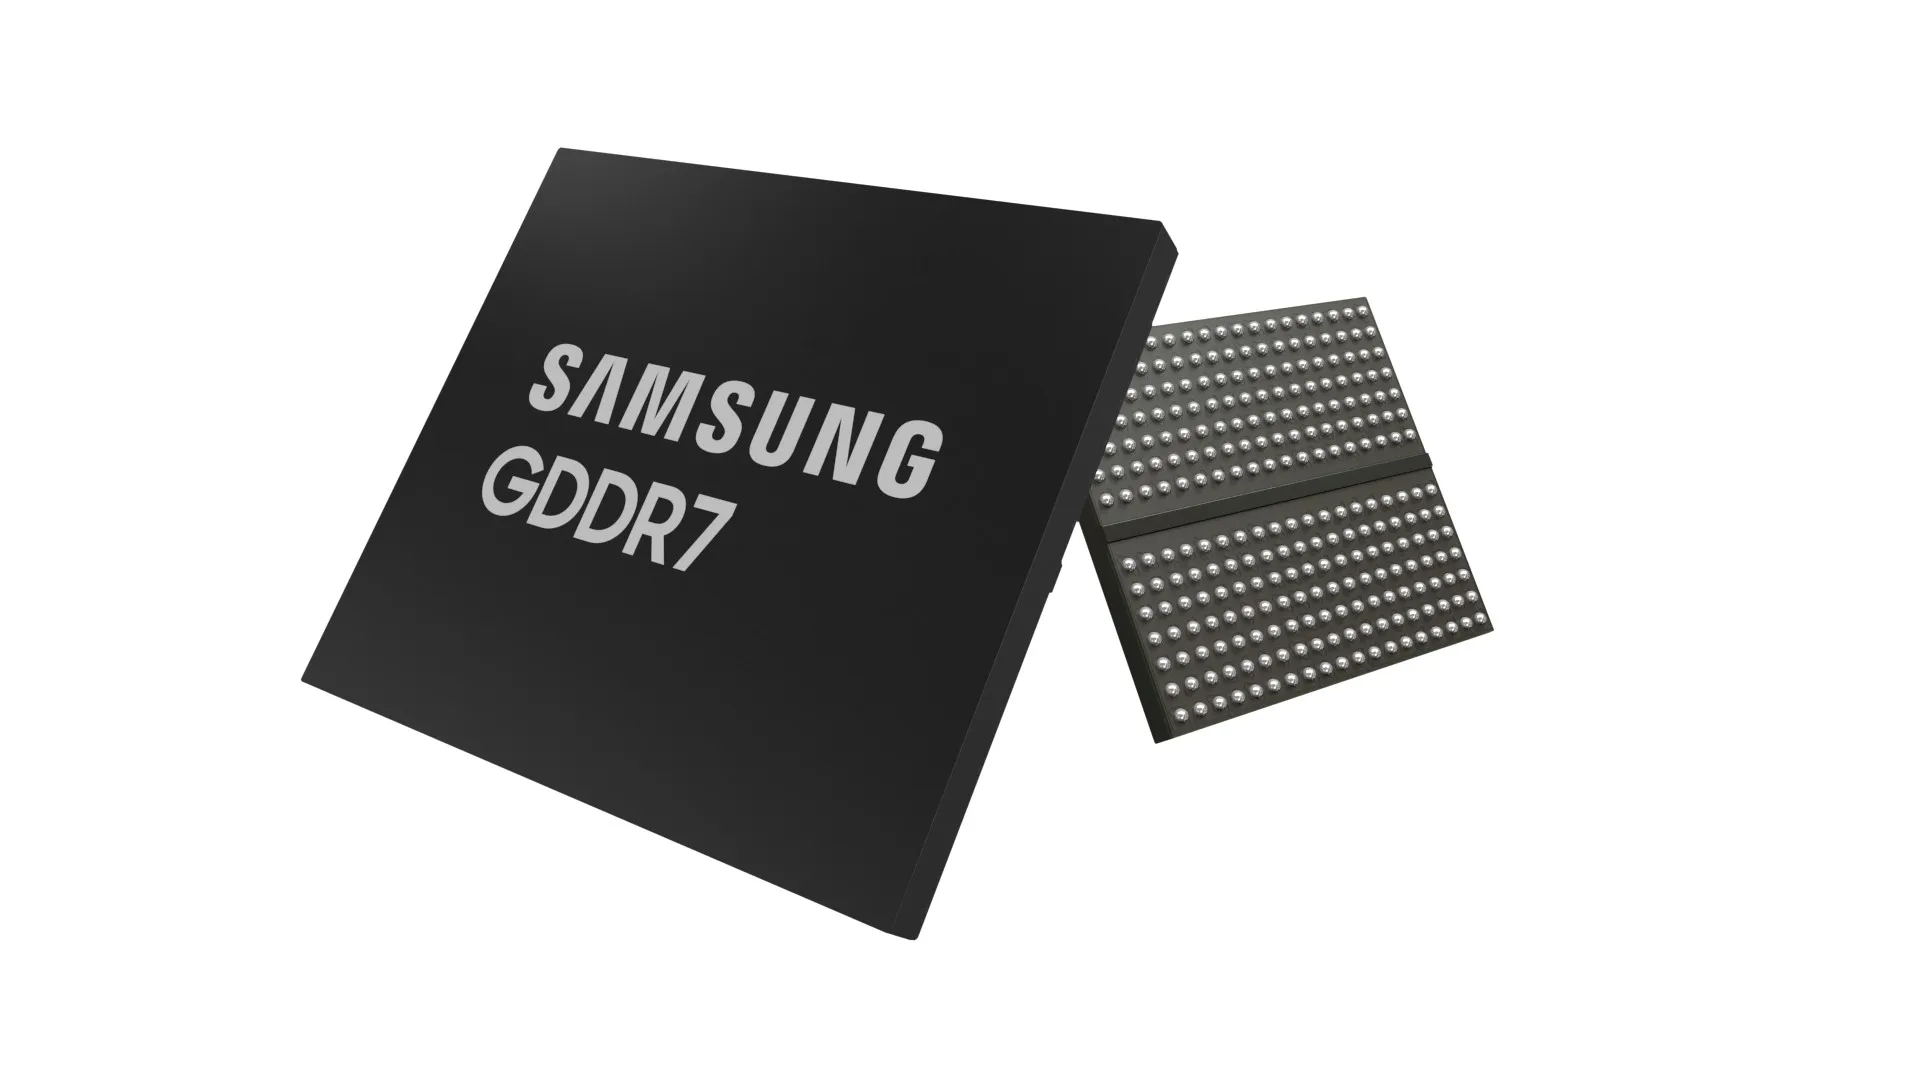 Samsung’s GDDR7 memory